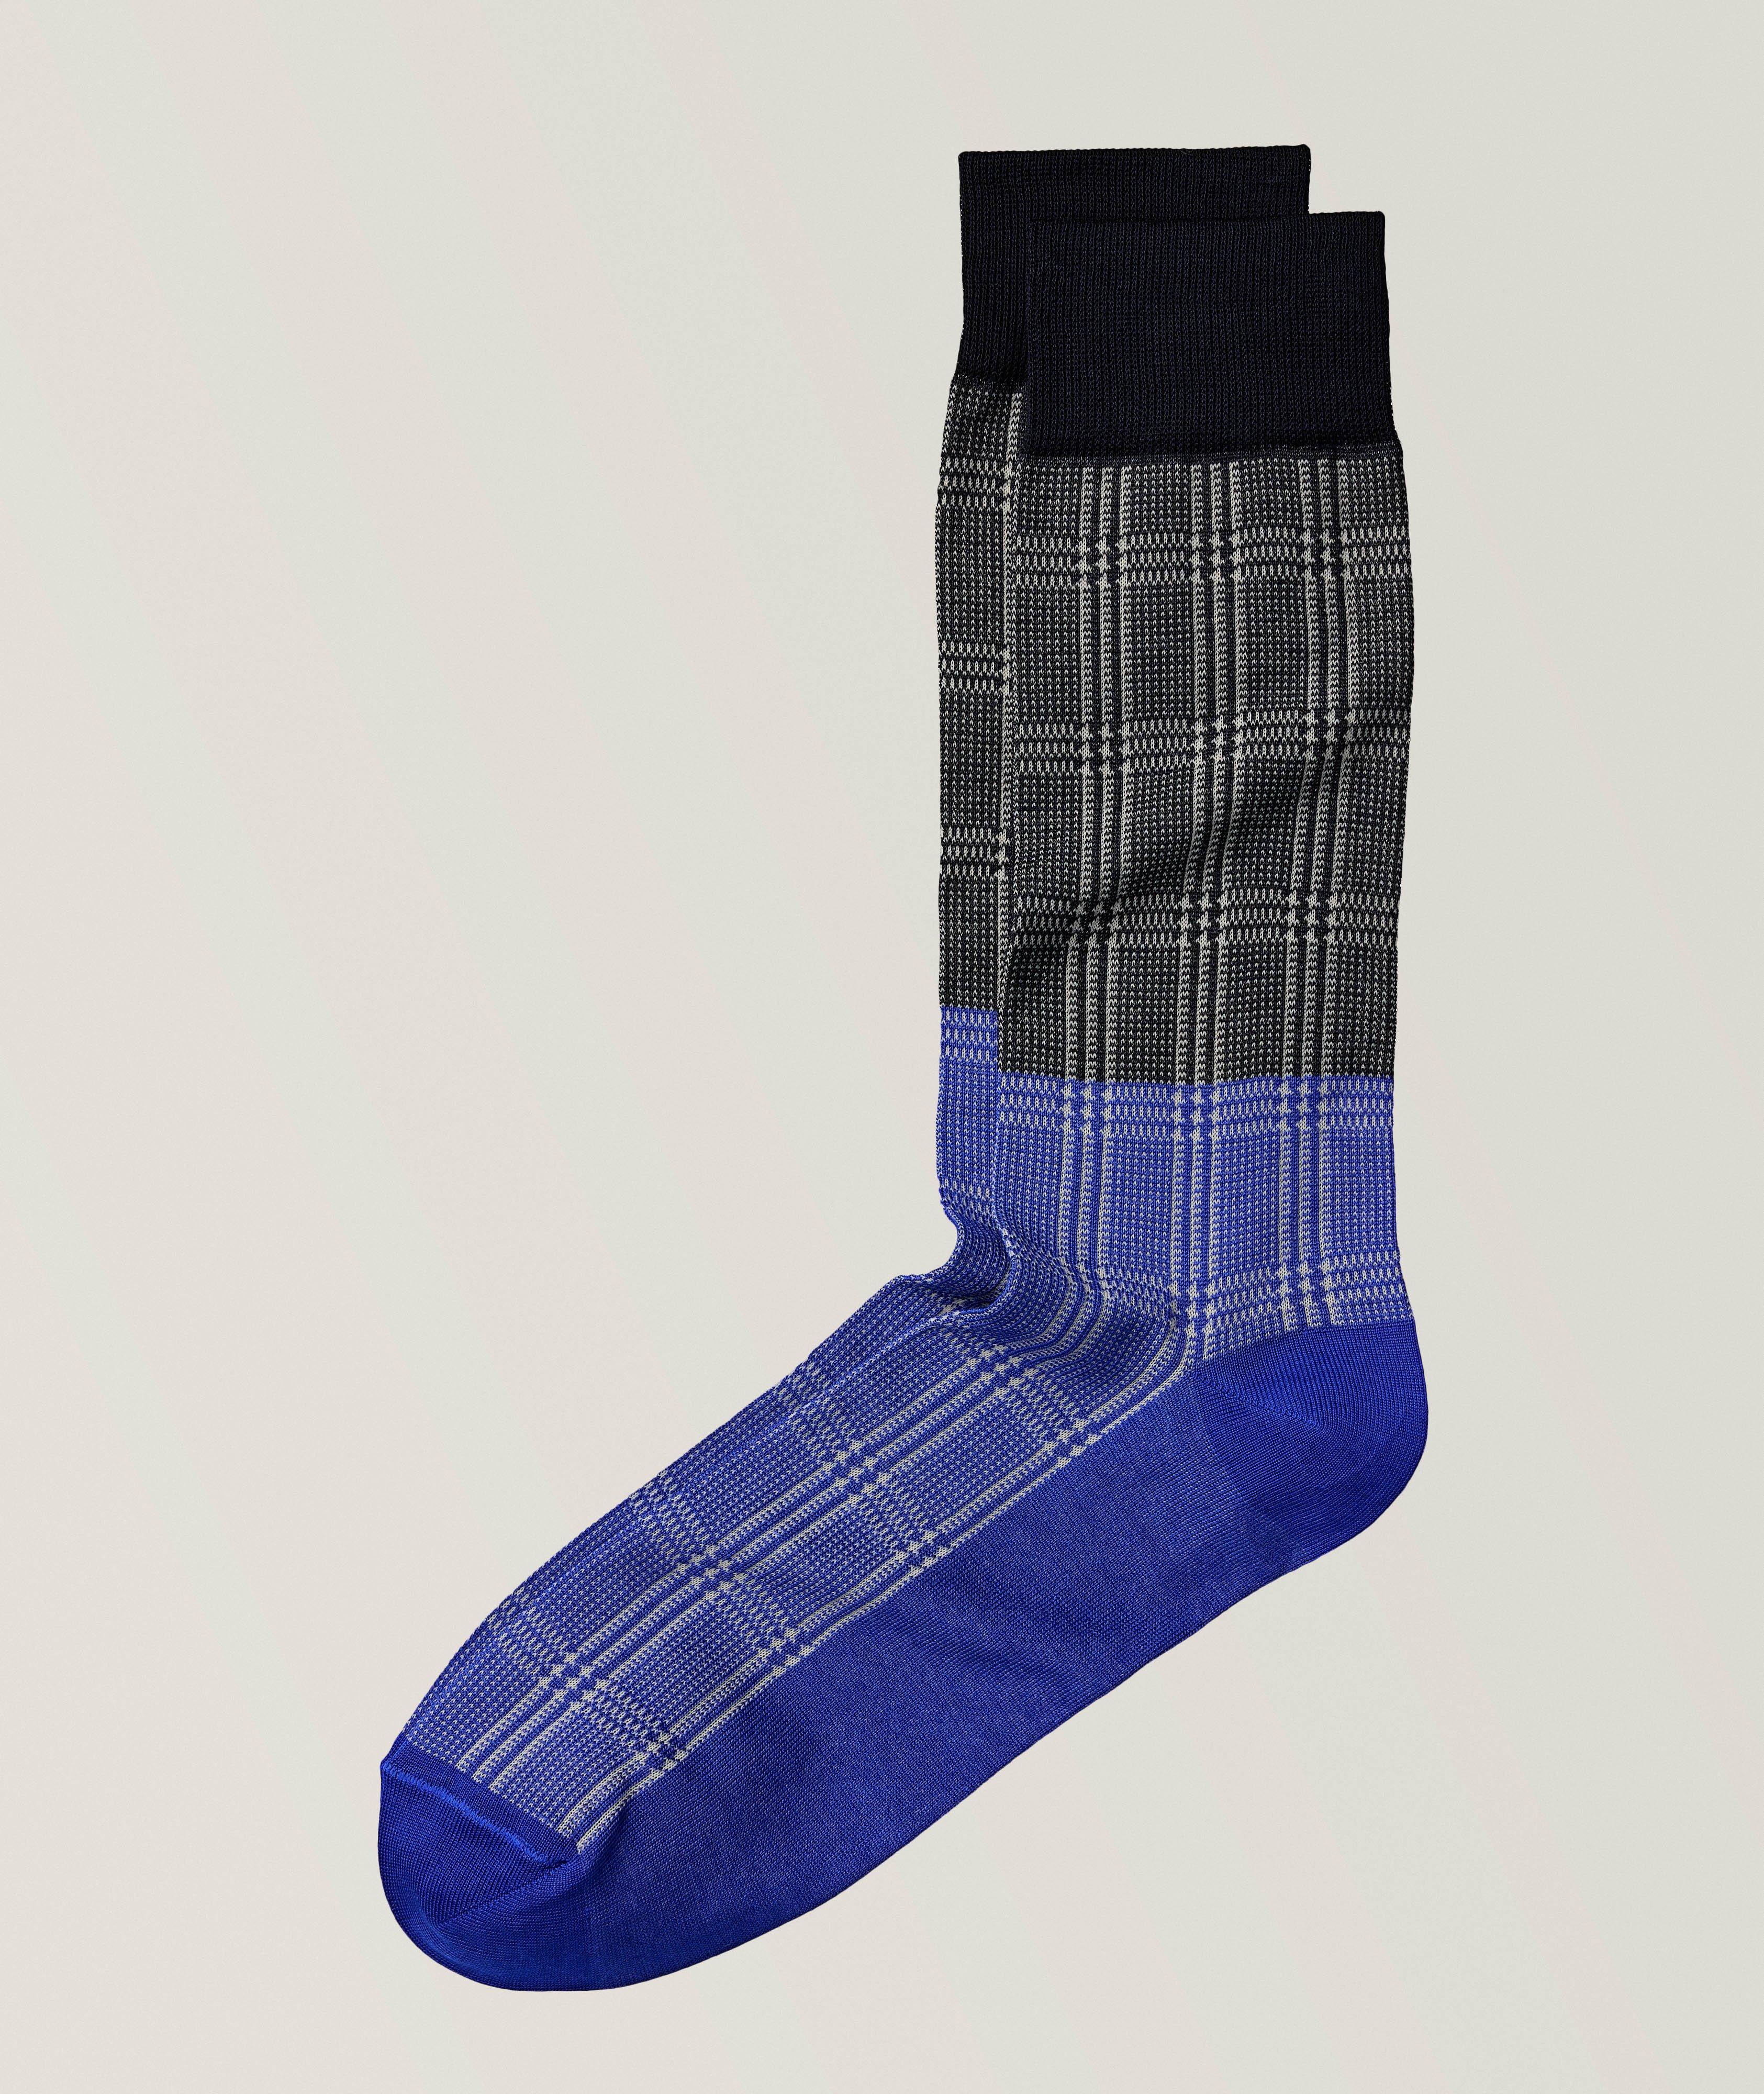 Two-Tone Plaid Cotton-Polyamide Dress Socks image 0